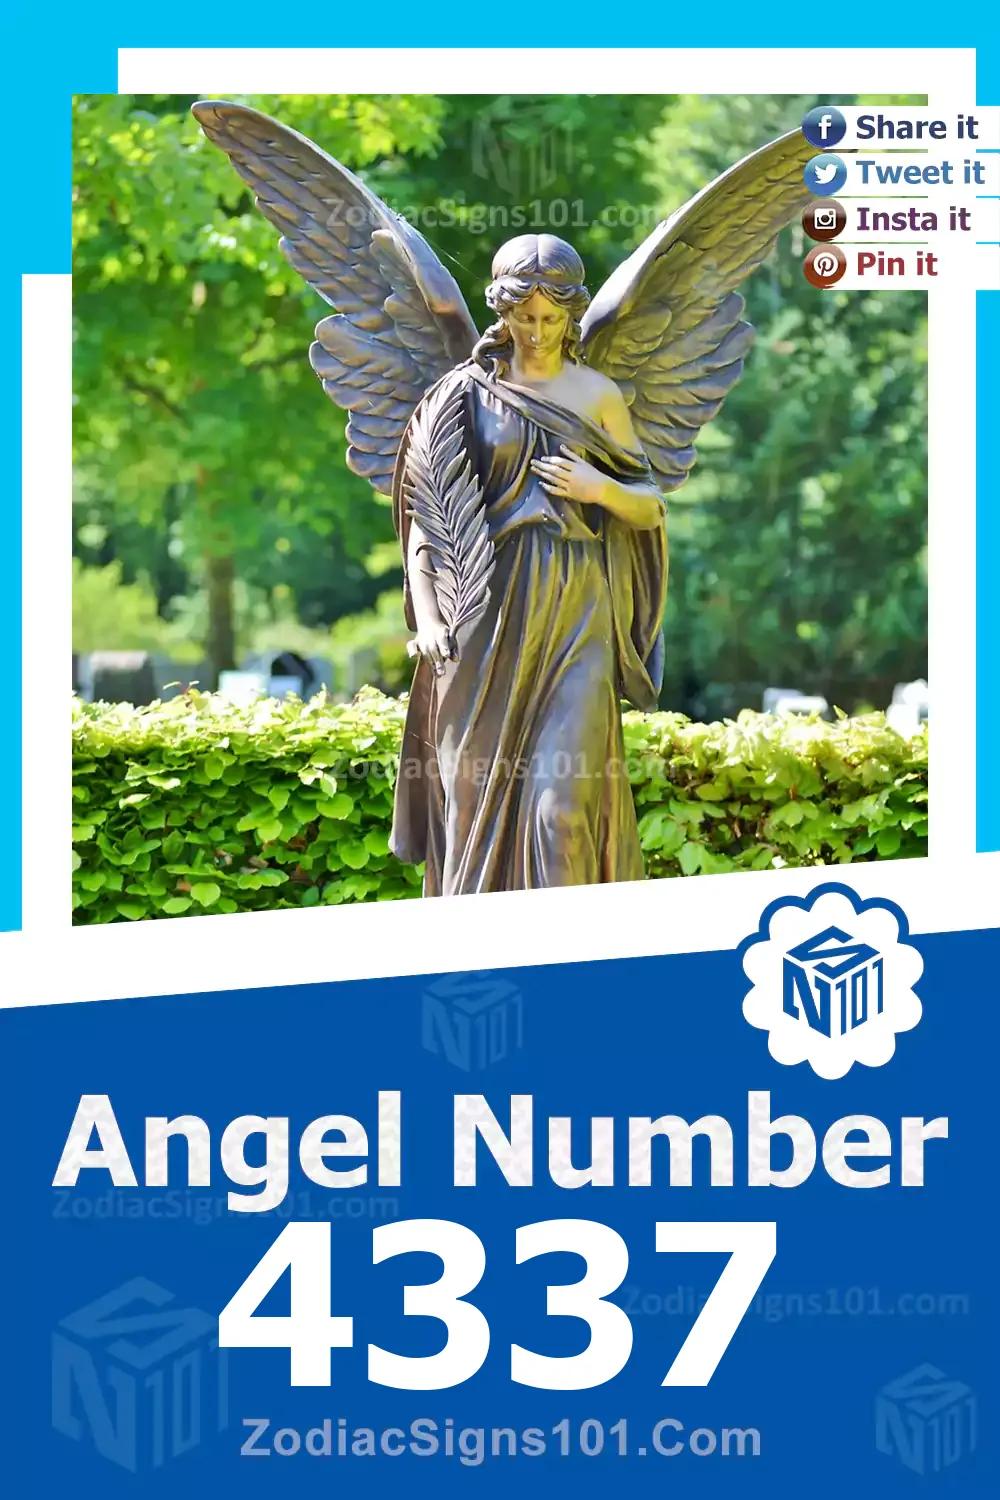 4337-Angel-Number-Meaning.jpg